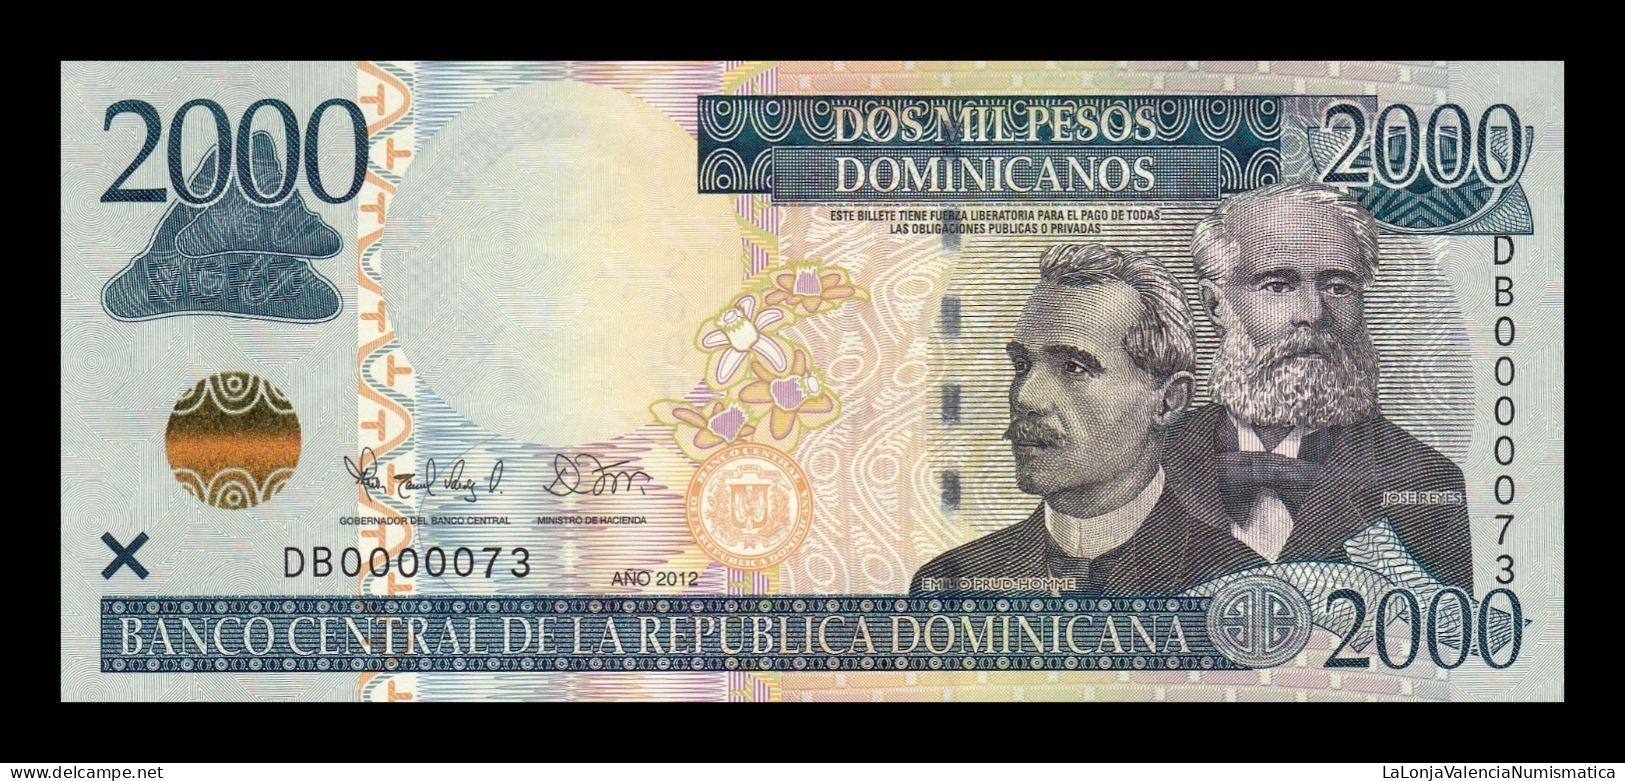 República Dominicana 2000 Pesos Dominicanos 2012 Pick 188b Low Serial 73 Sc Unc - República Dominicana